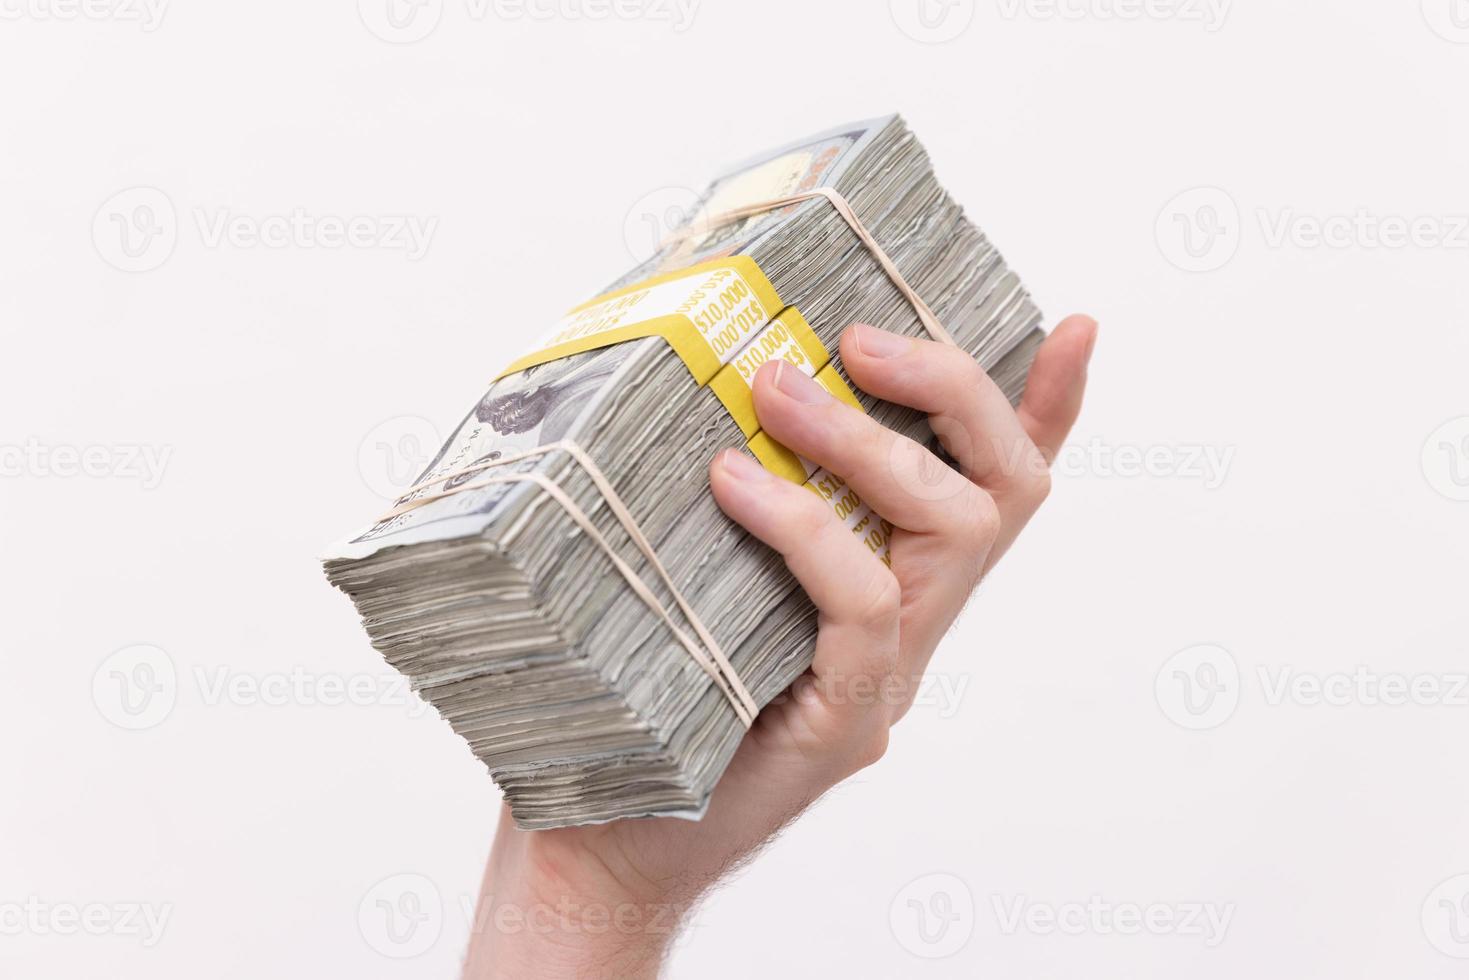 Stacks of One Hundred Dollar Bills photo